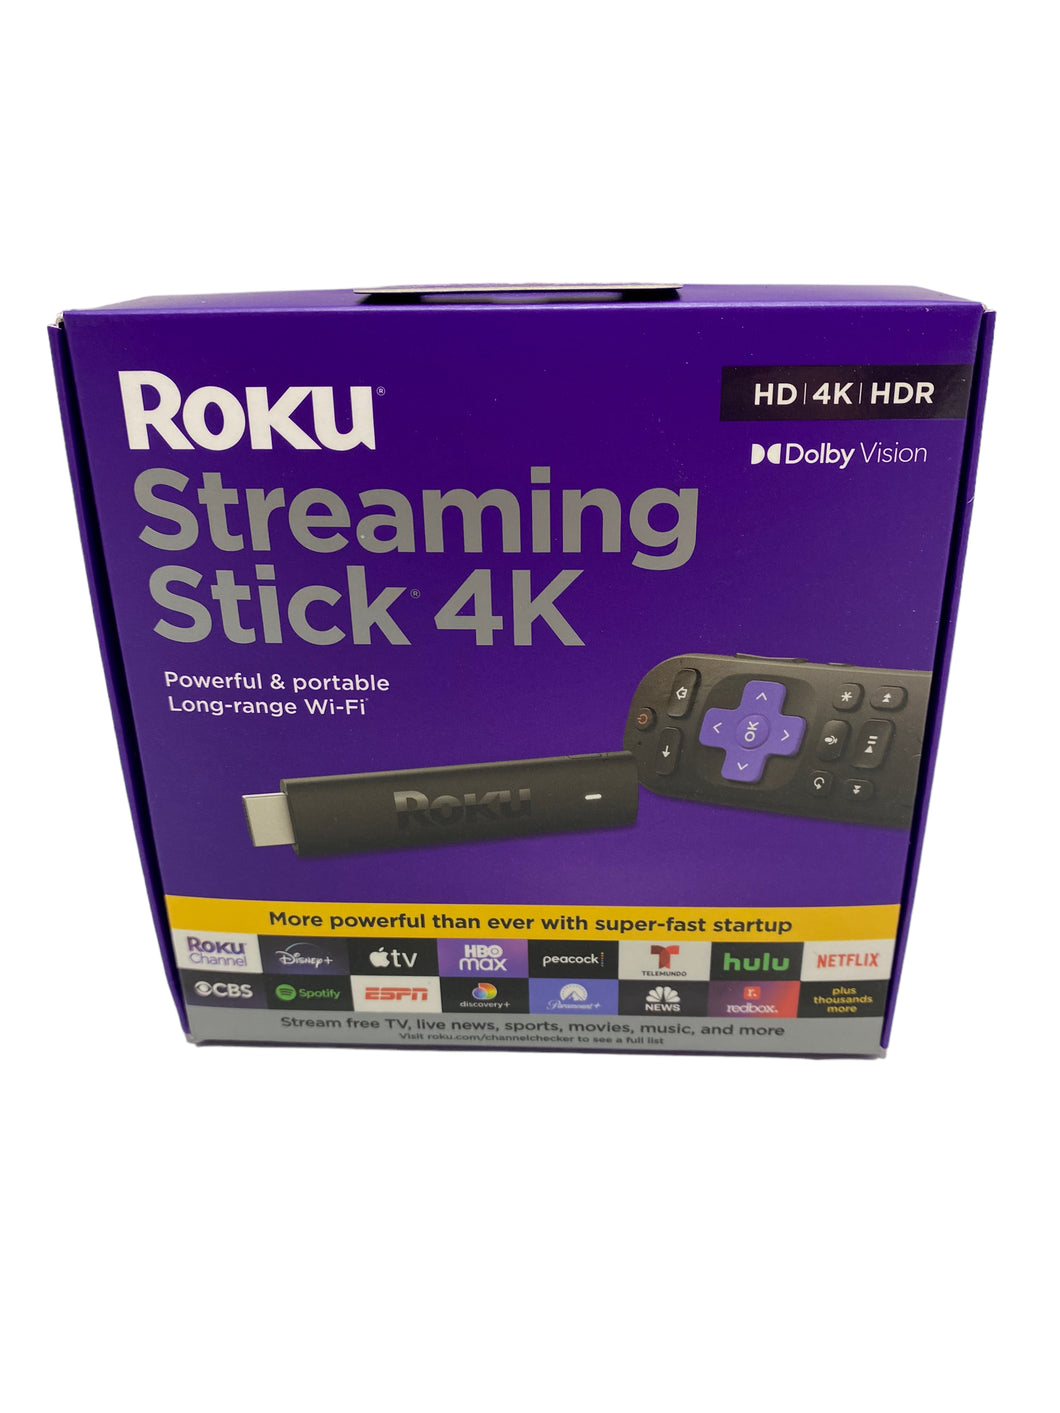 ROKU Streaming Stick 4K Powerful & Portable Long-Range Wi-Fi 3820R2 - FreemanLiquidators - [product_description]